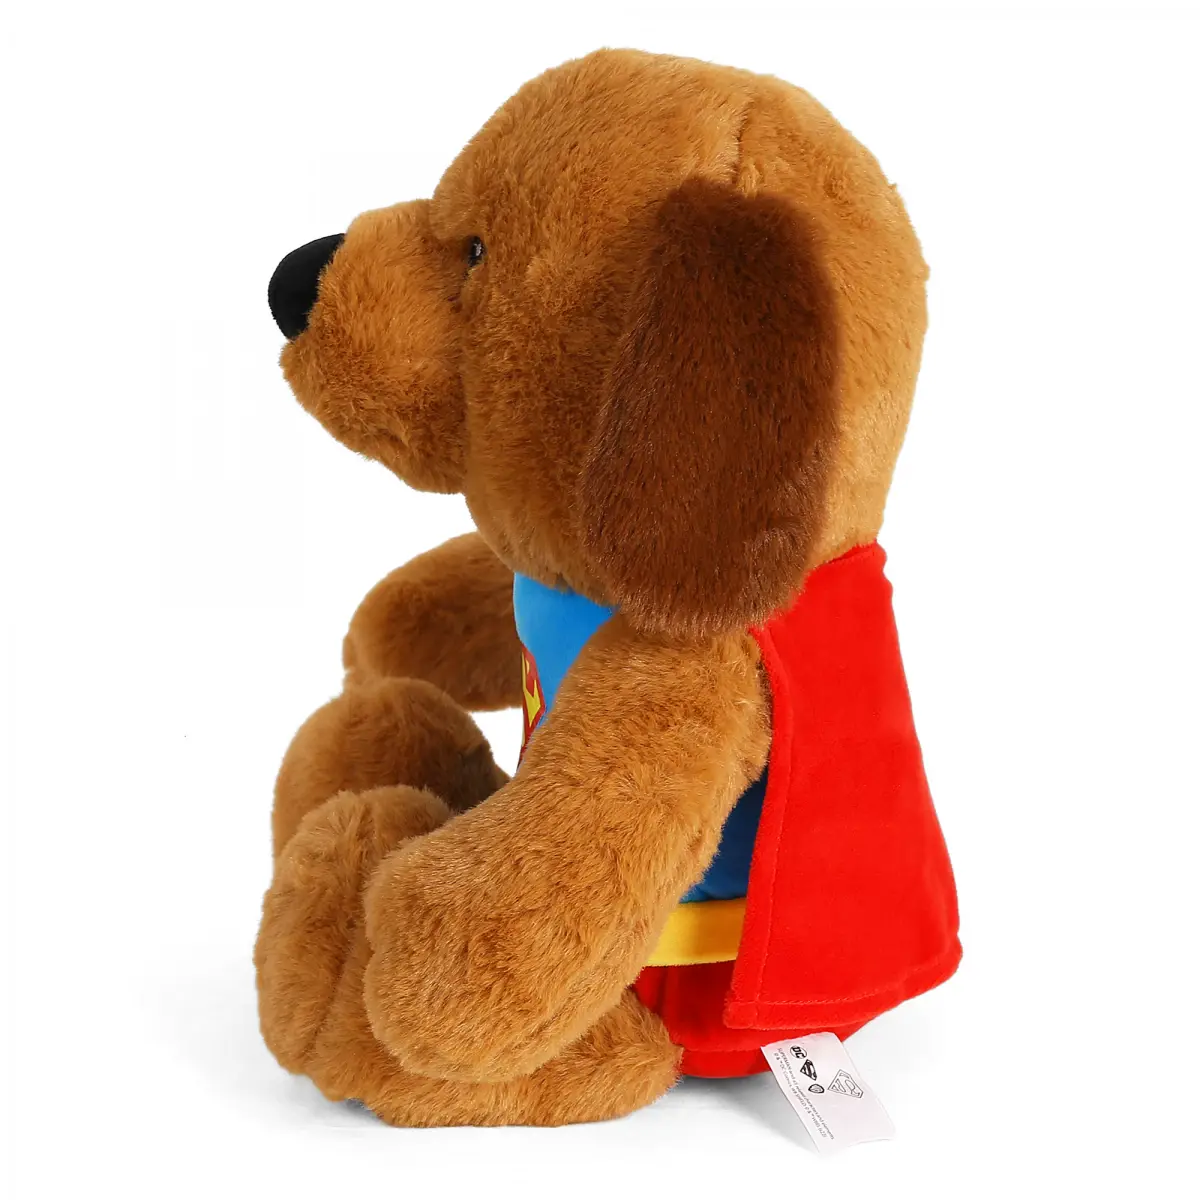 Mirada Superman Brown Bear, Soft Toys for Kids, 30cm, 3Y+, Brown